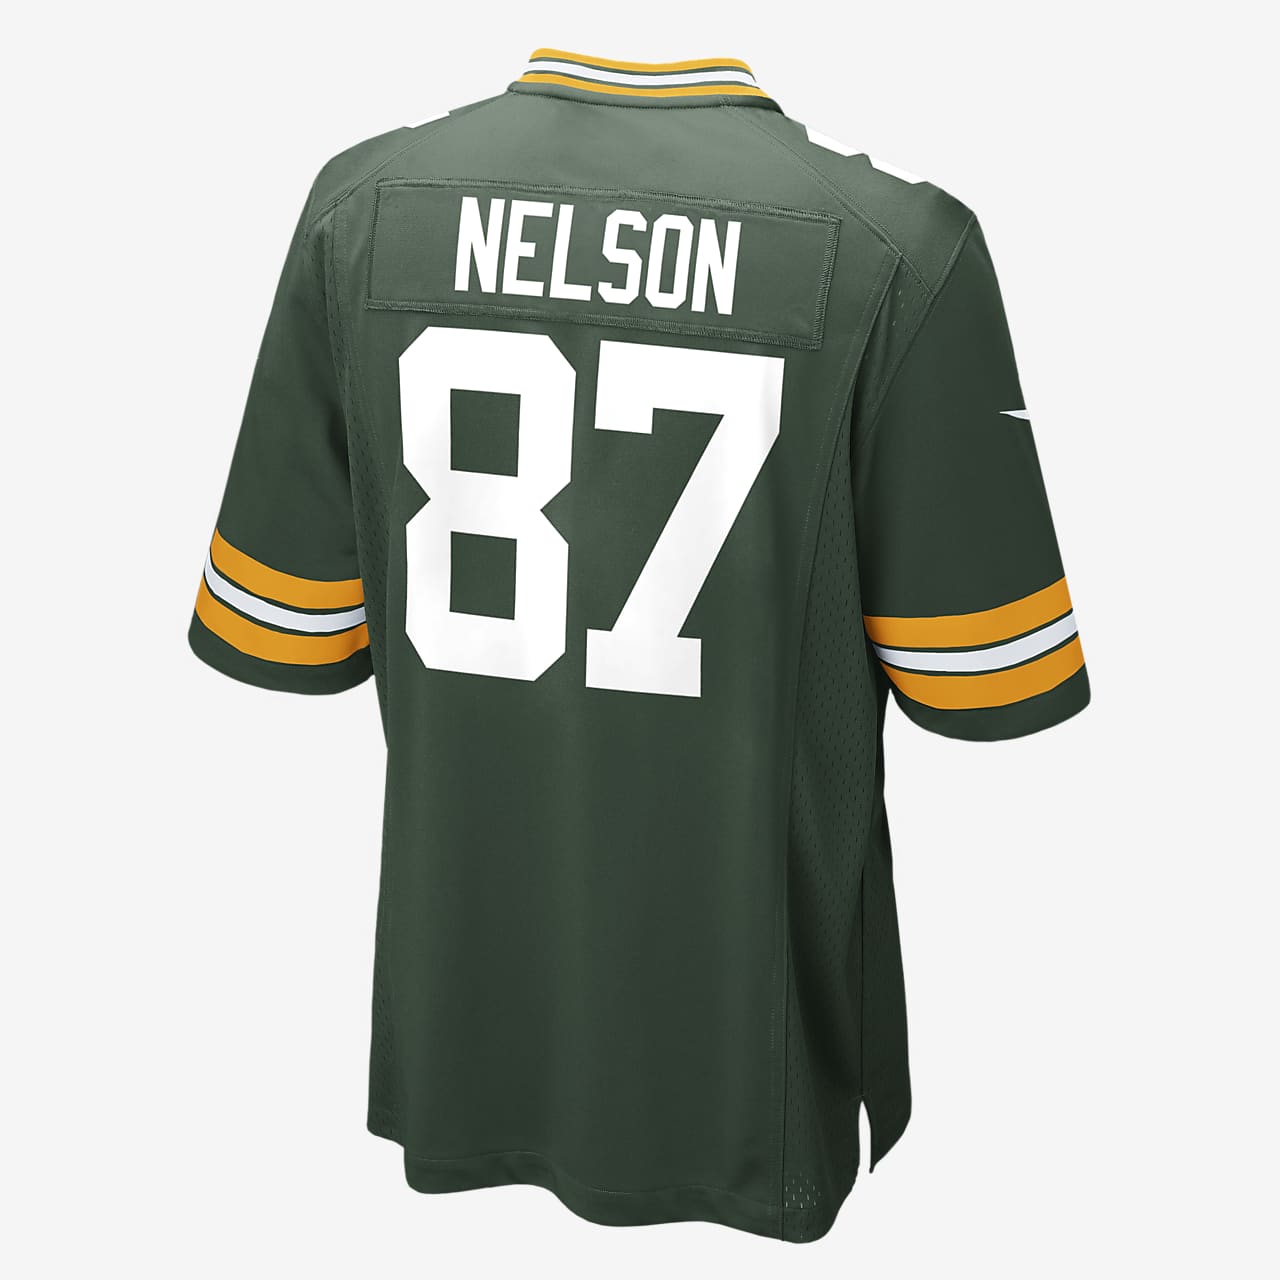 NFL Green Bay Packers (Jordy Nelson 